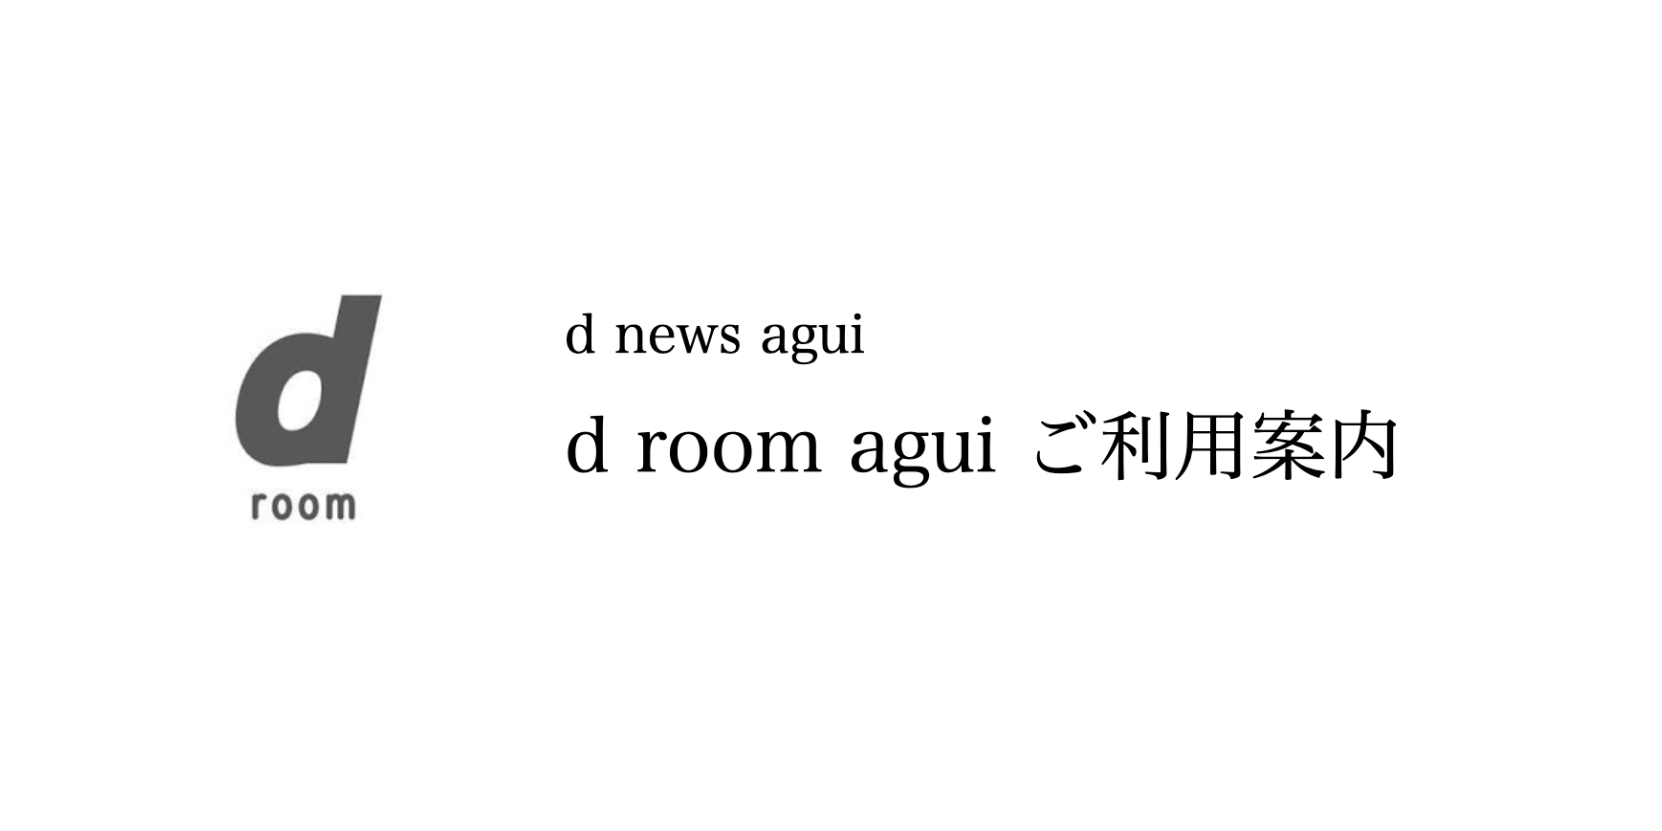 d news aichi agui現地レポート１